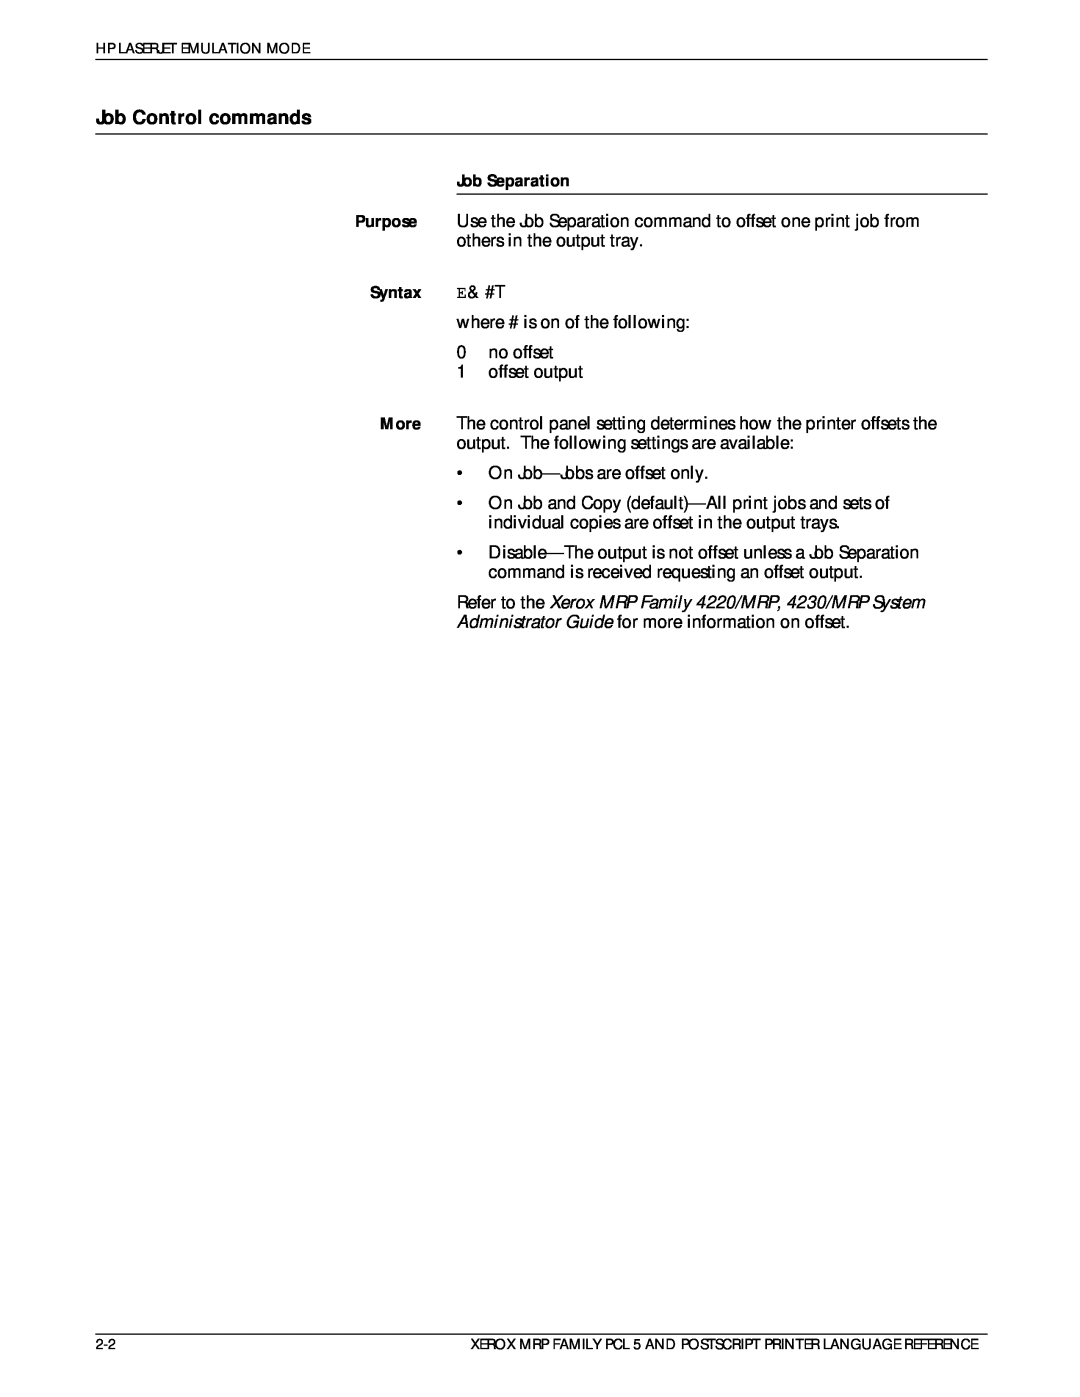 Xerox 4215/MRP manual Job Control commands, Job Separation, Syntax E& #T 